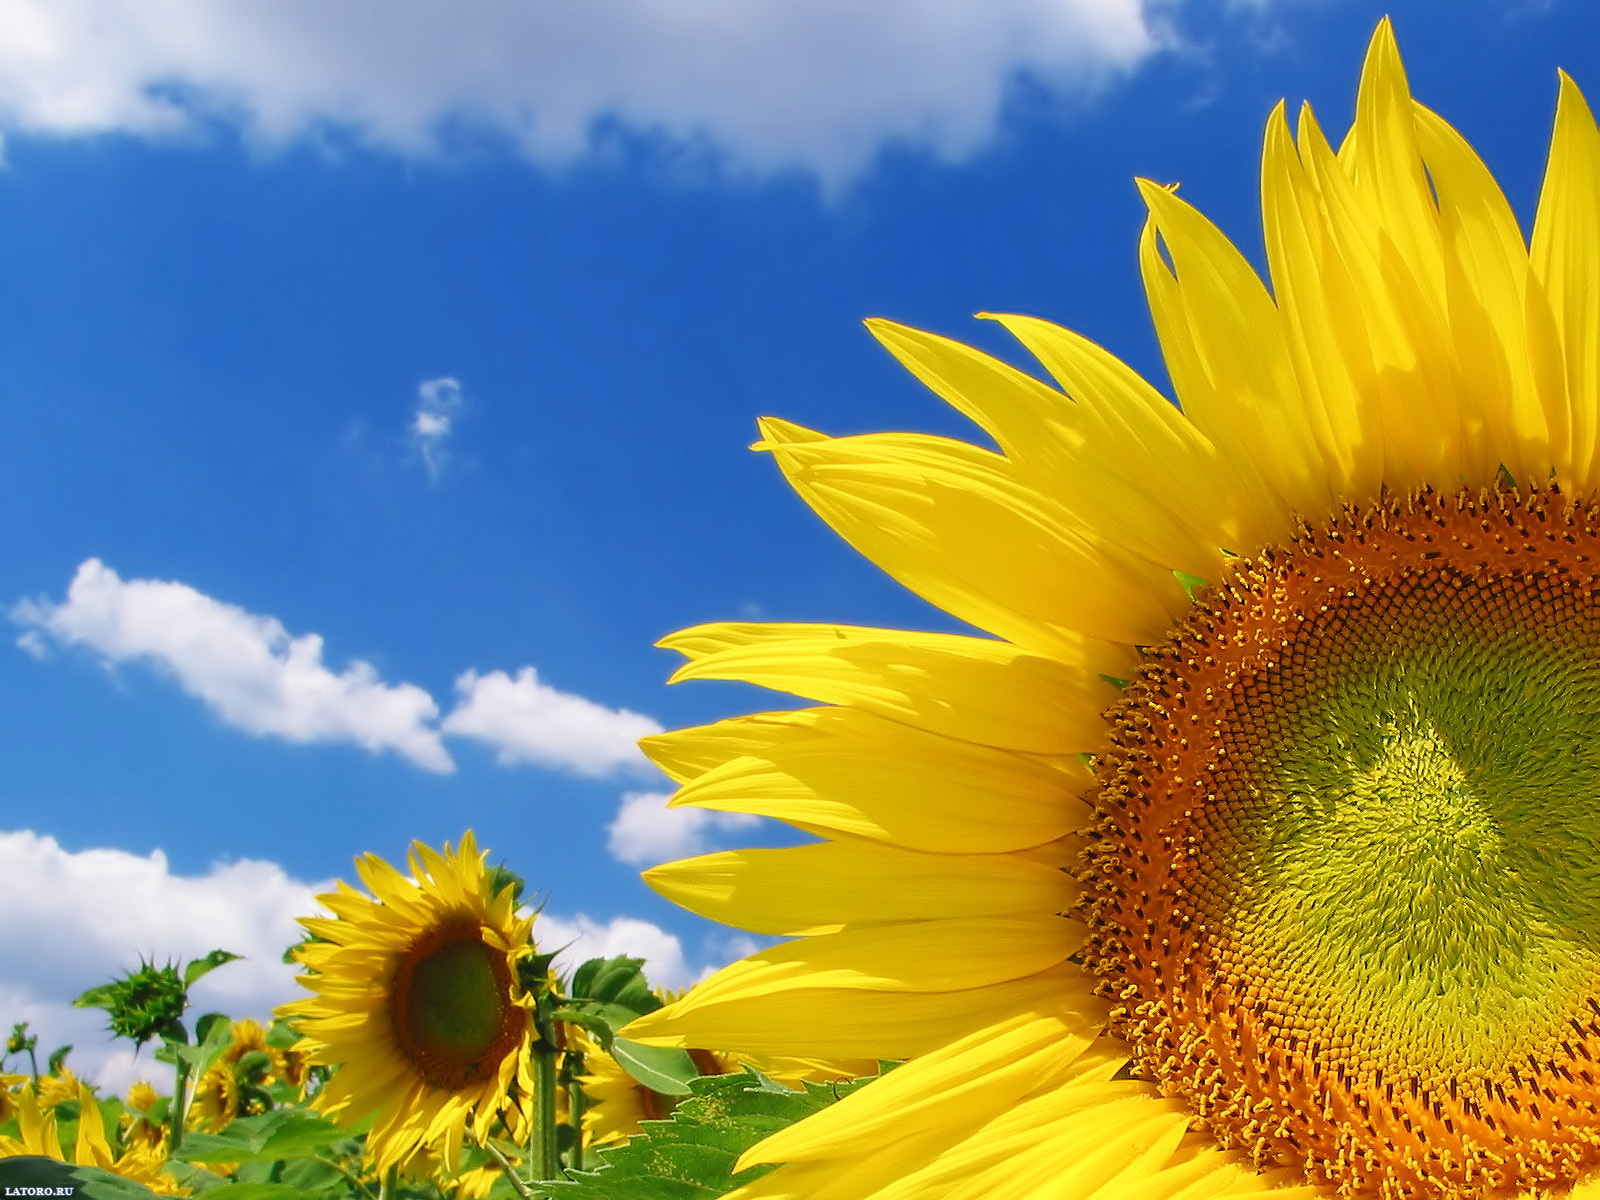 Sunflowers Desktop Wallpaper On Latoro